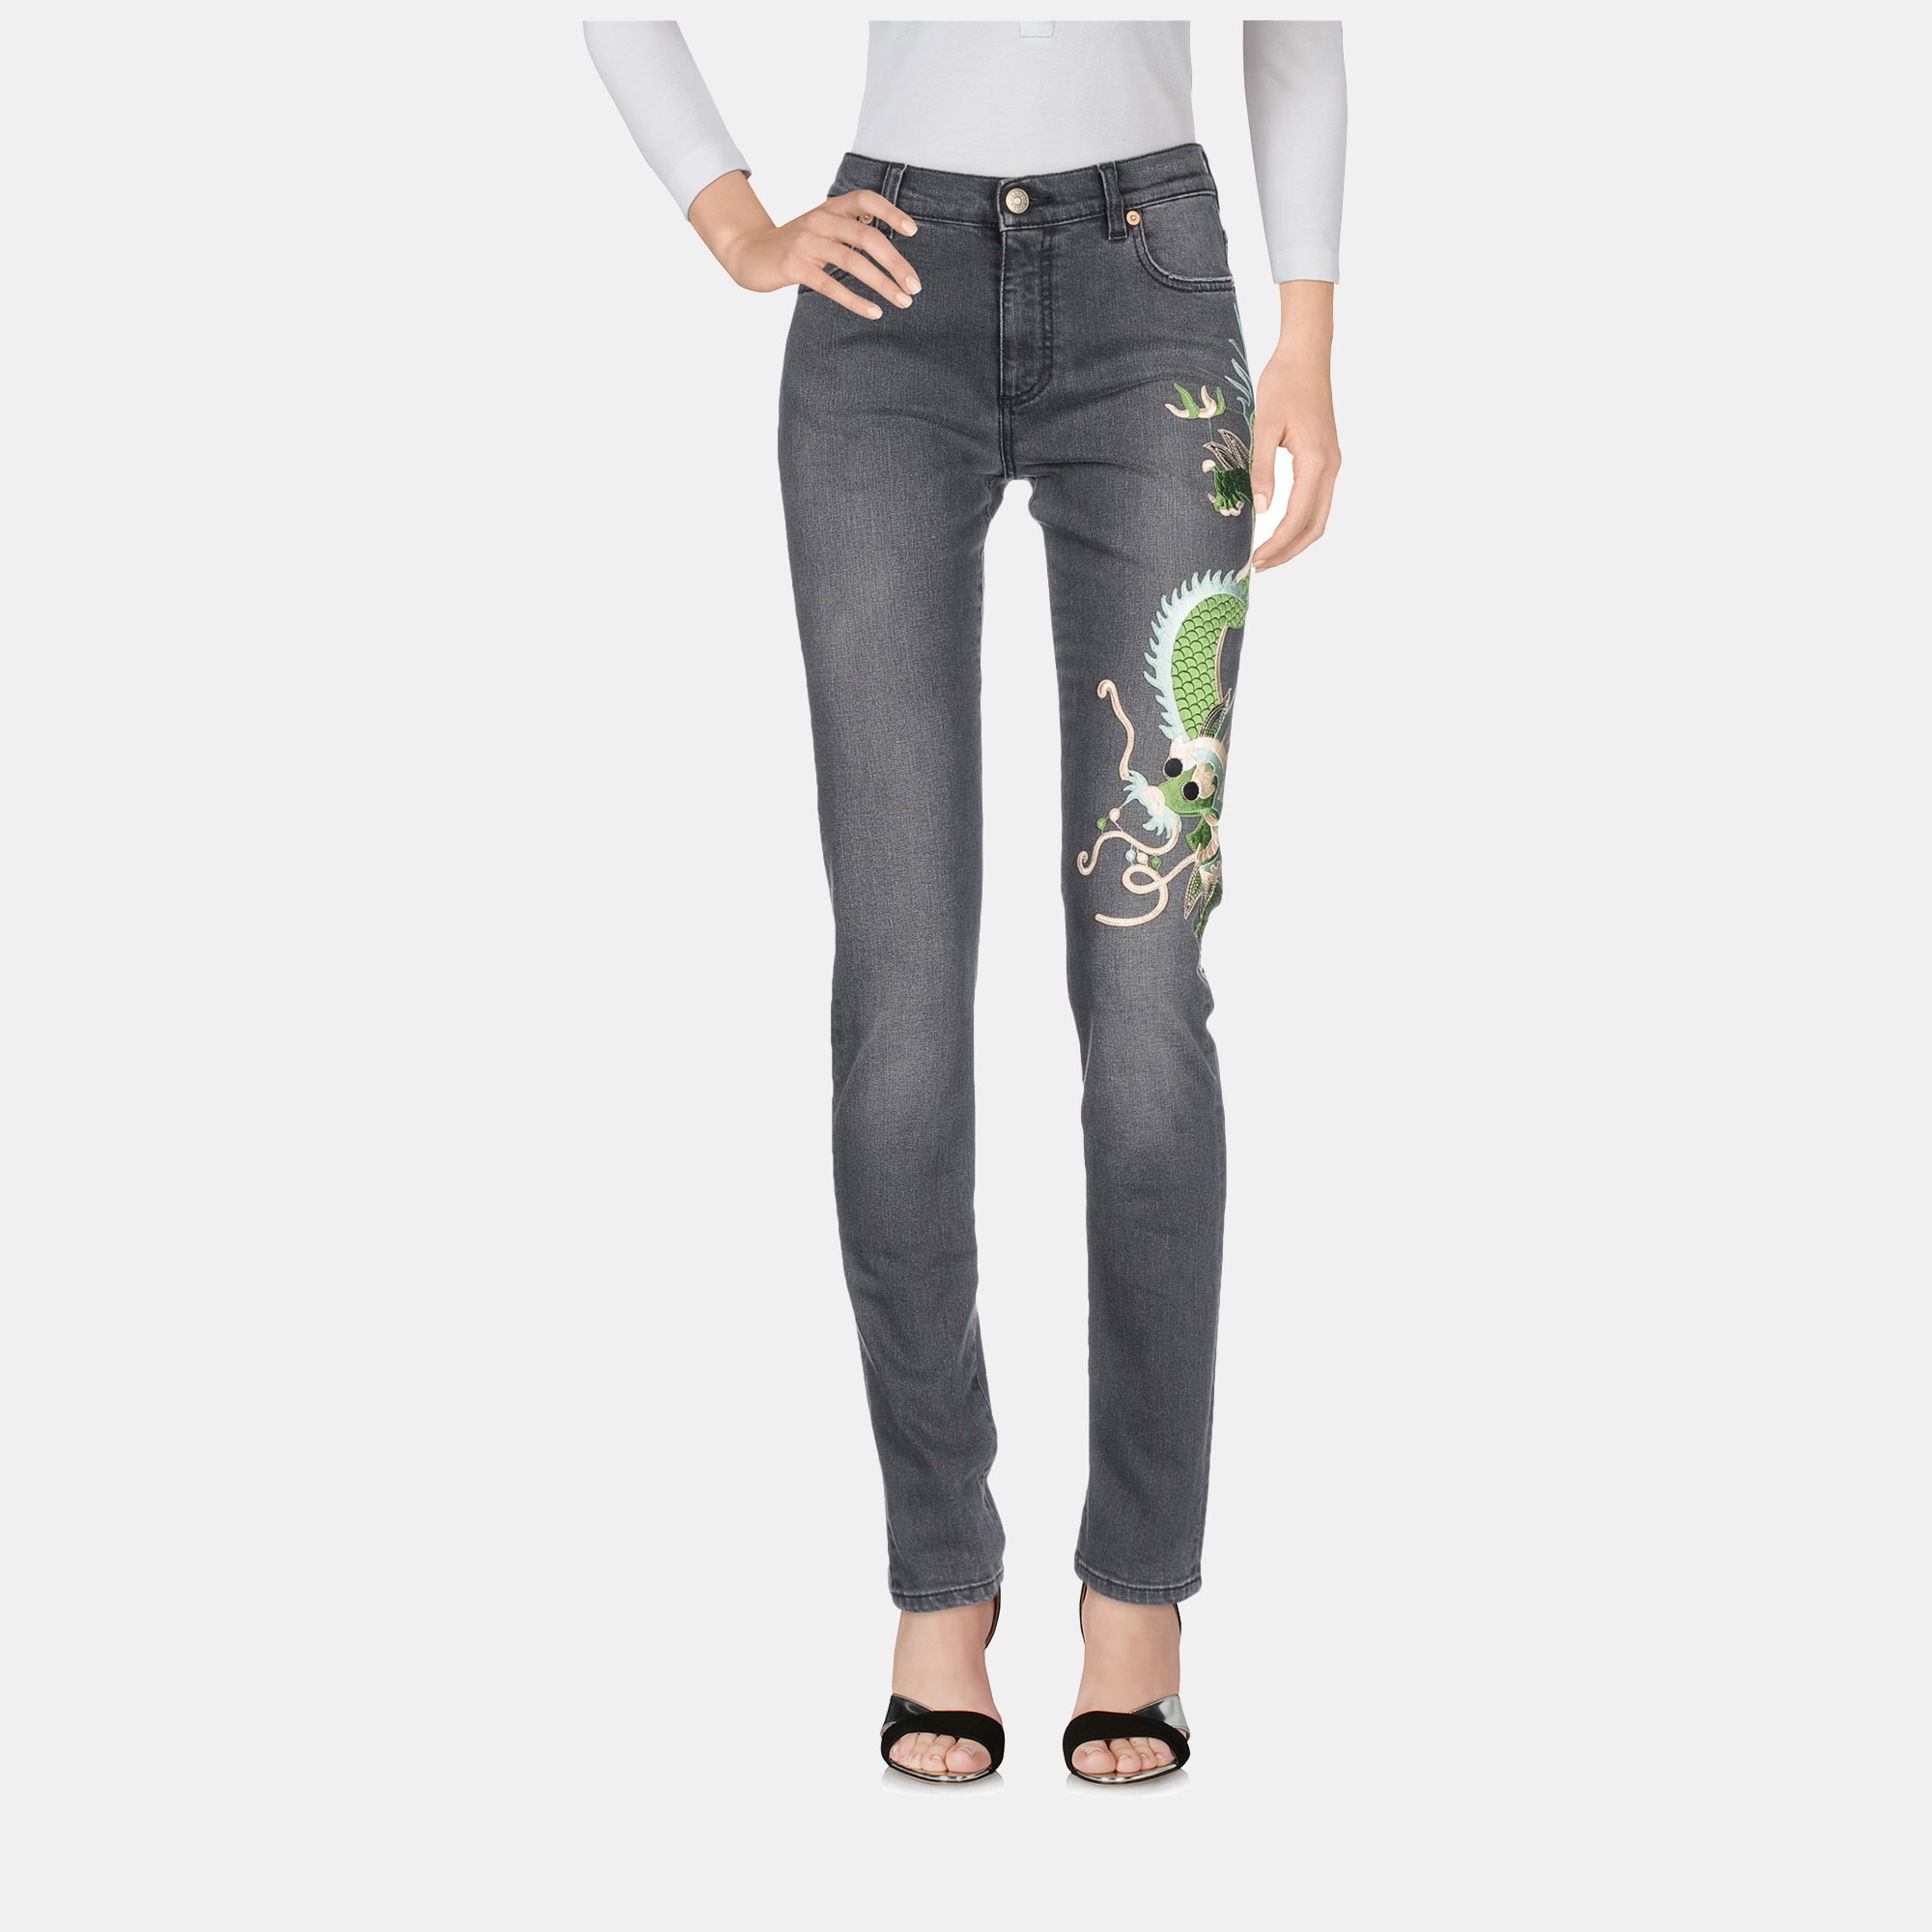 Gucci grey denim jeans size 24